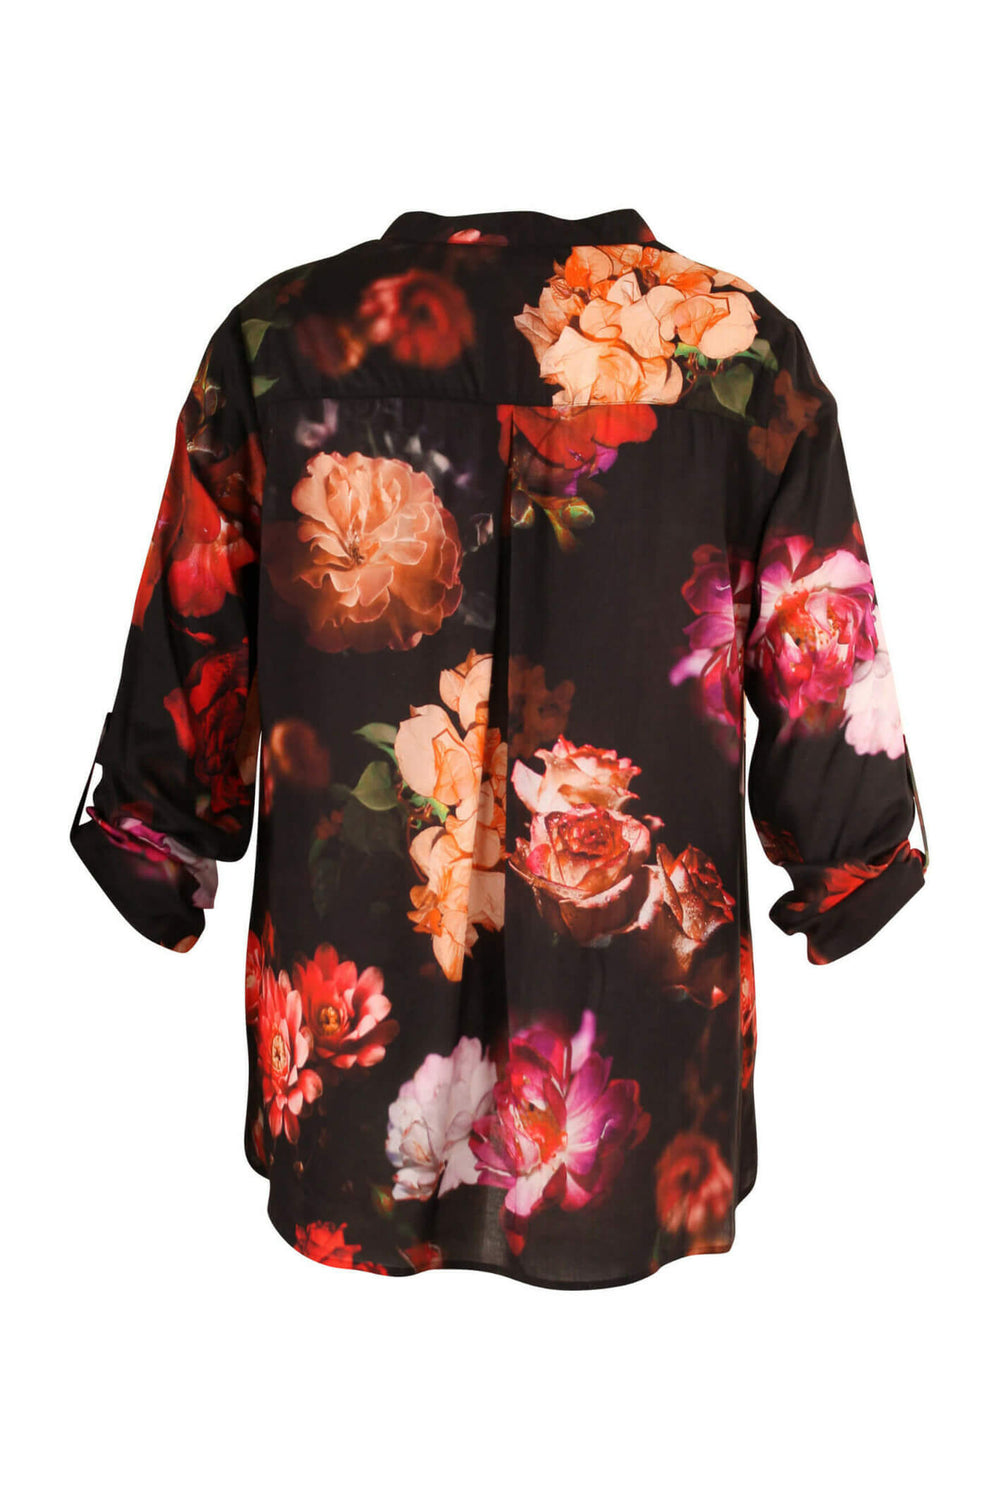 Doris Streich 214340 80 Black Floral Shirt Blouse - Shirley Allum